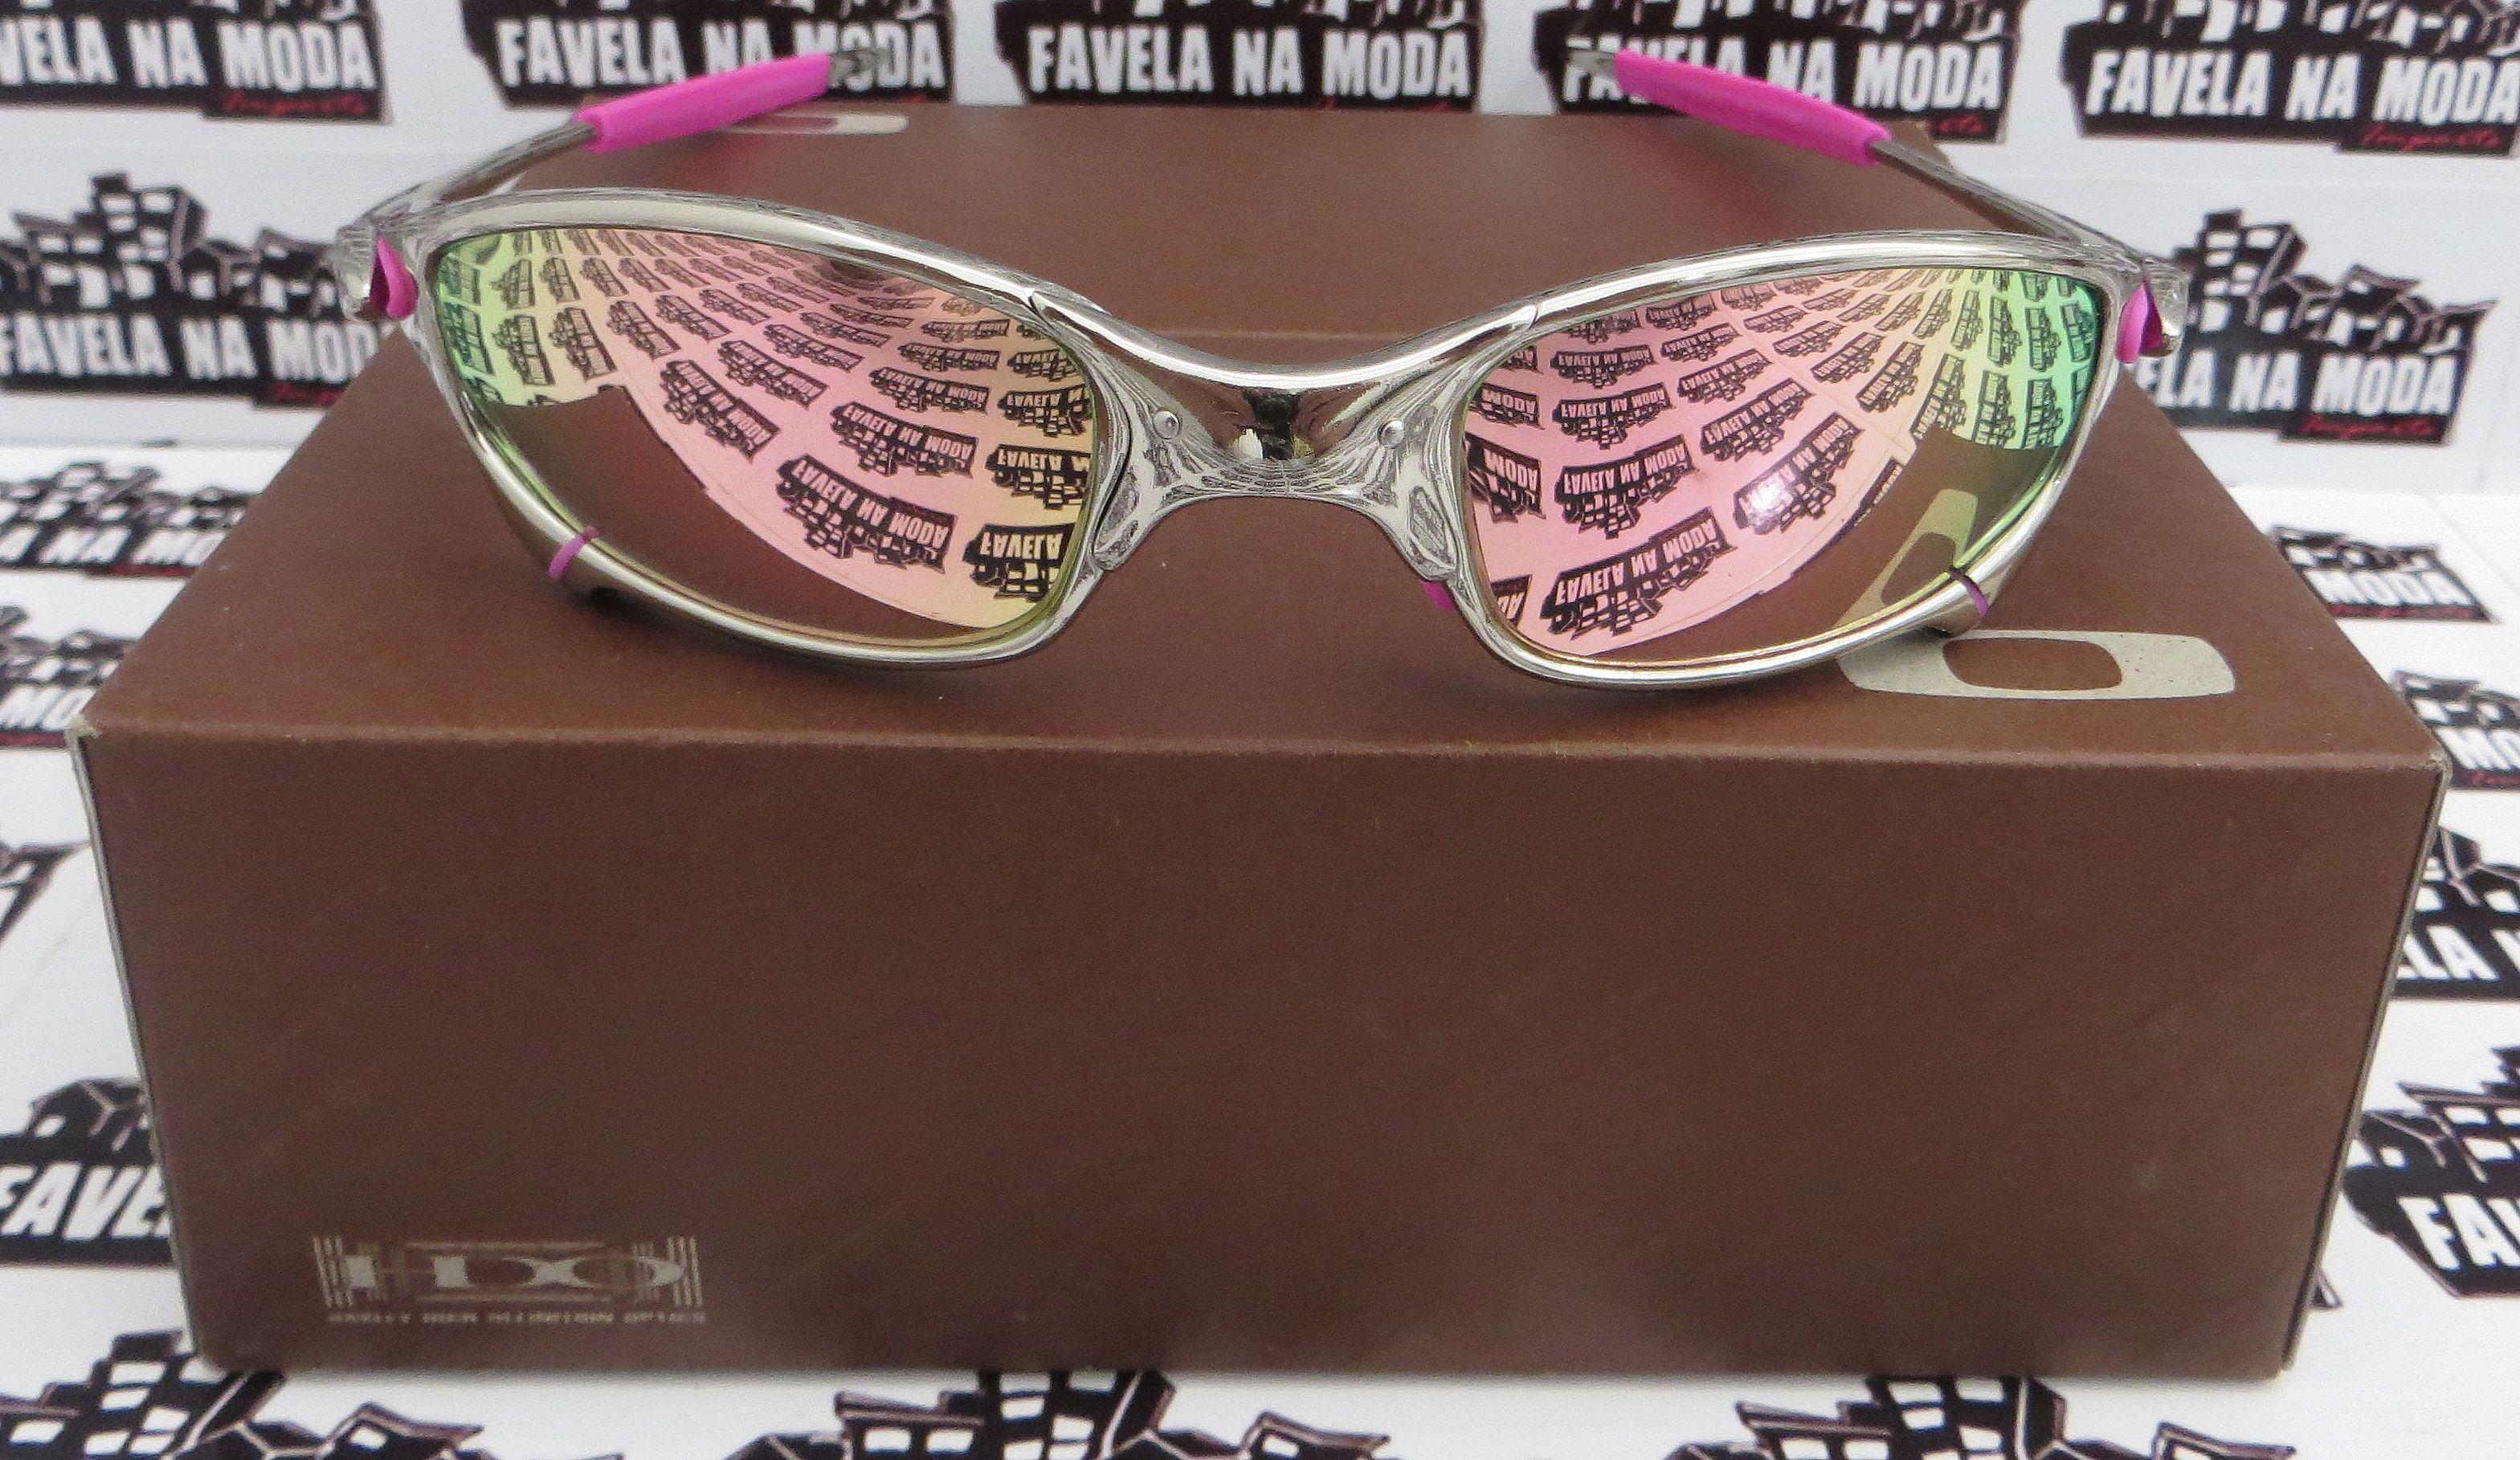 Óculos Oakley Juliet - X-Metal / Clear Vermelha / Borrachas Vermelhas -  Favela na Moda Imports